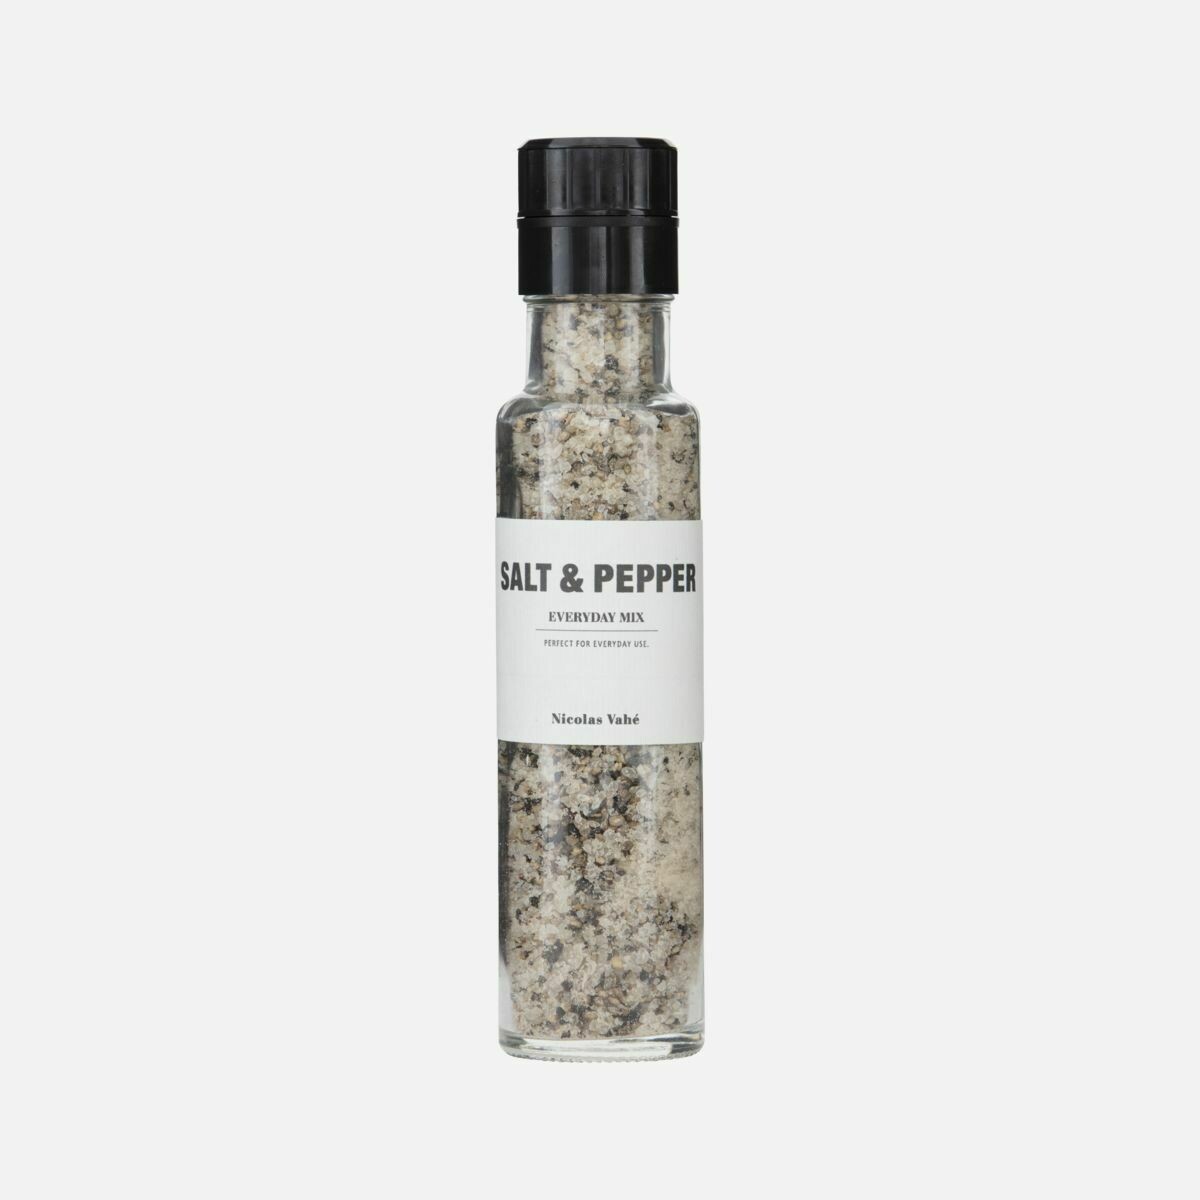 Salt and Pepper - Everyday mix